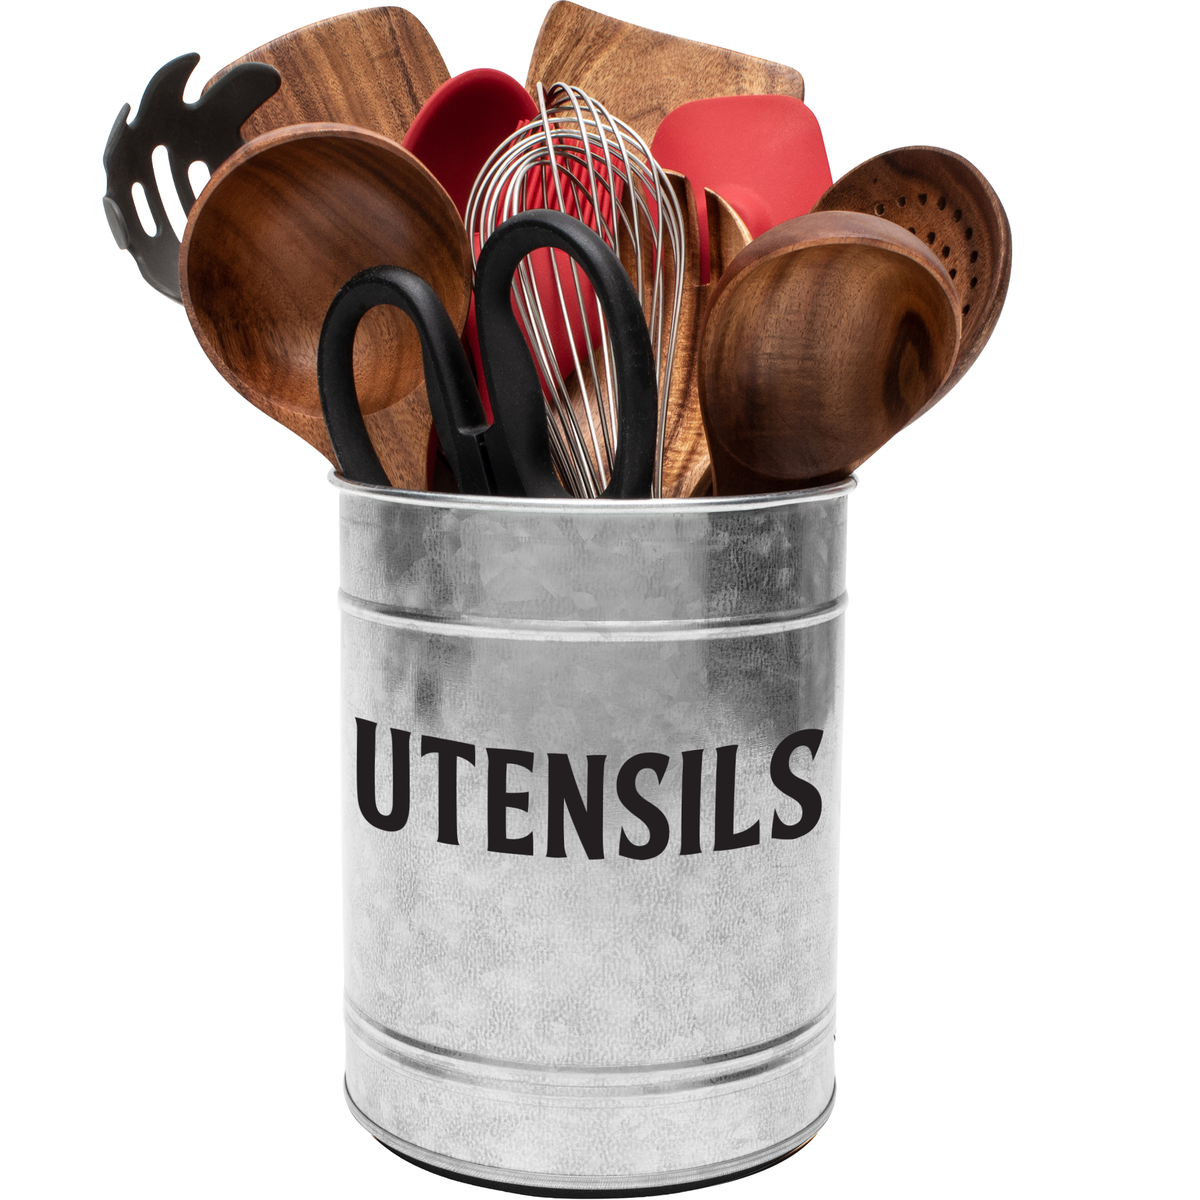 Galvanized Utensil Holder by Saratoga Home filled with kitchen utensils